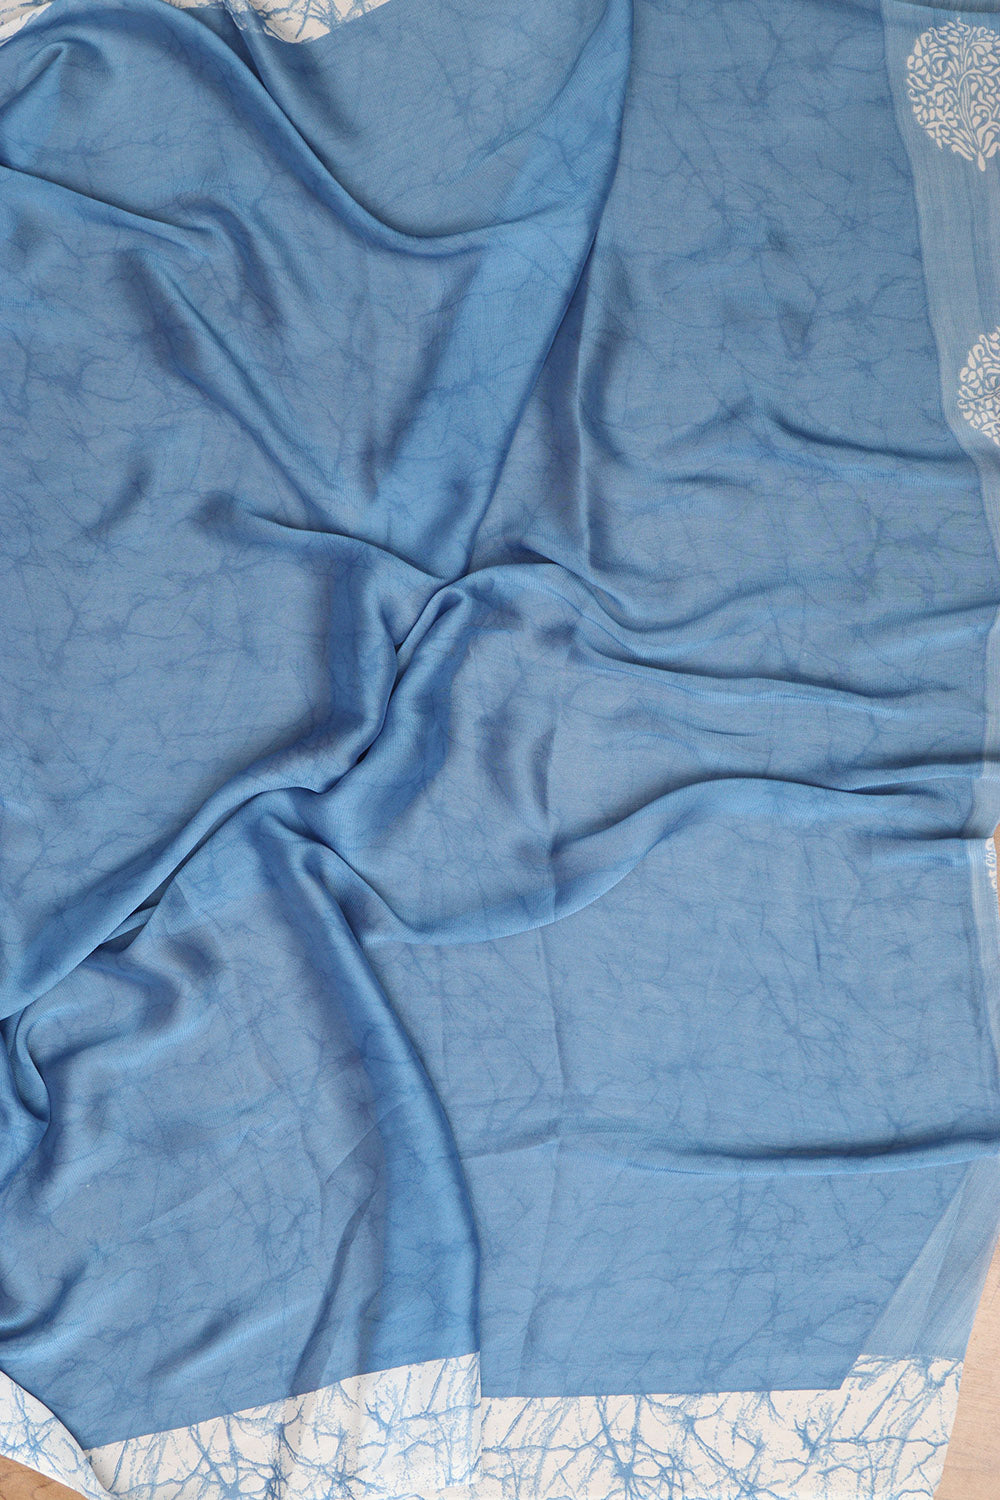 Stunning Blue Crepe Saree with Digital Print - Luxurion World